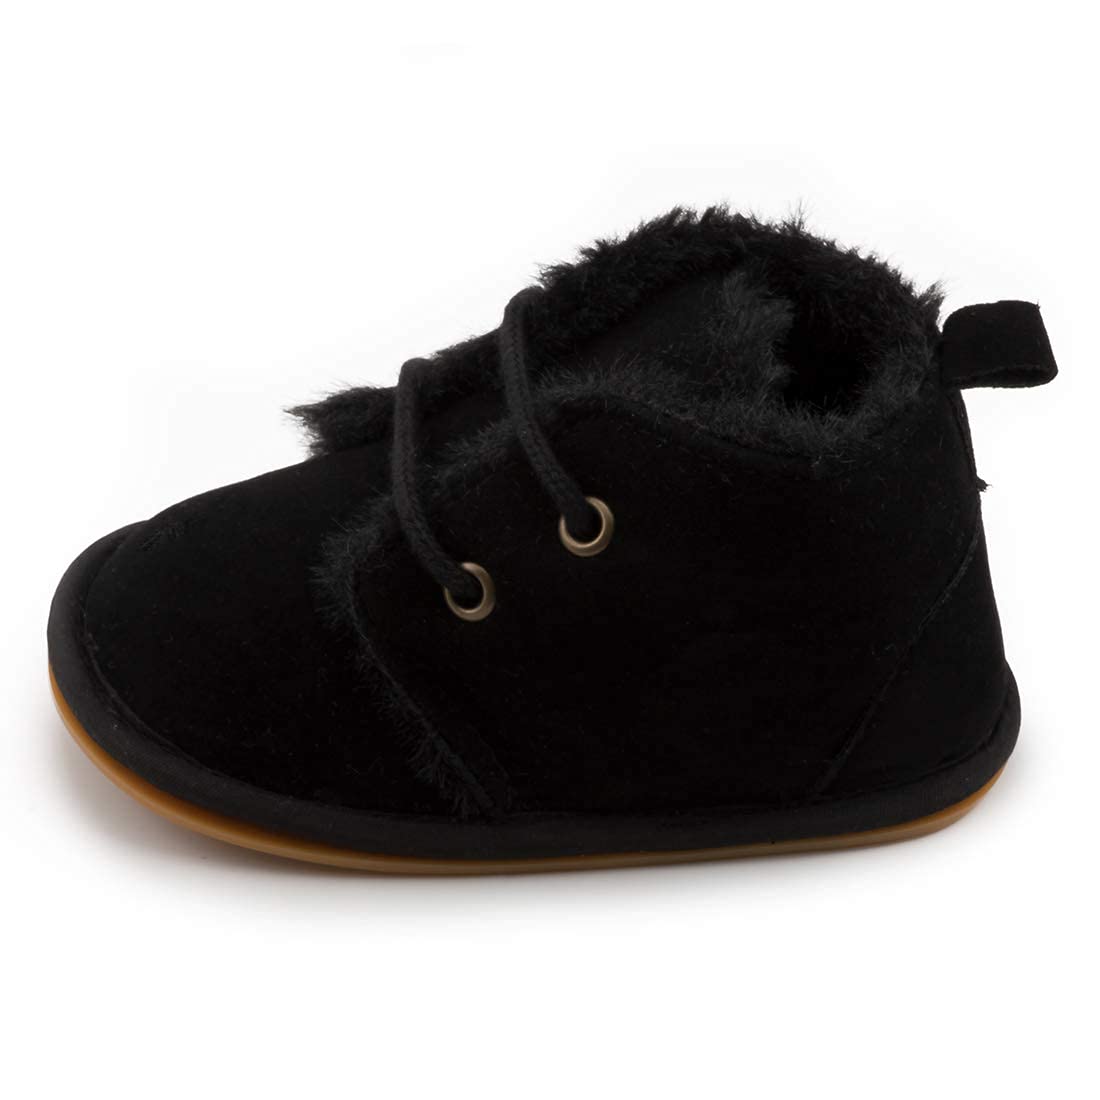 Zoolar Cozy Fur Non-Slip Warm Booties 6-12 Months Baby Boys Girls Toddler First Walker Outdoor Winter Shoes